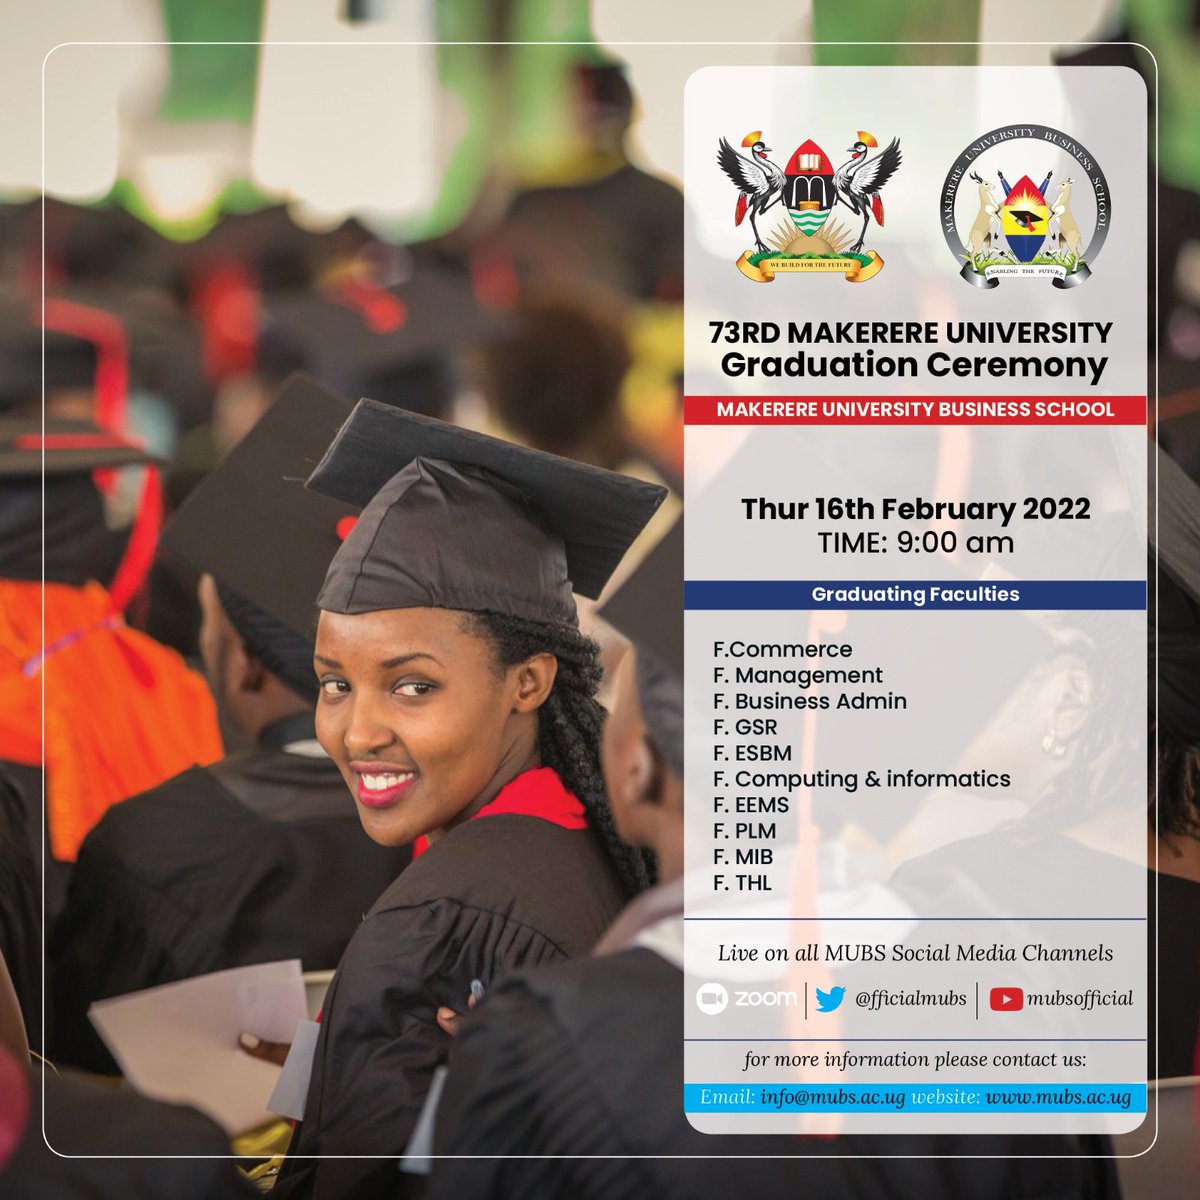 Congratulations to all Makerere University Business School (MUBS) Graduands 🎉🎊
#EnablingTheFuture
#Mak73rdGrad 
#BuildingForTheFuture
Cc. @OfficialMubs @dos_Mubs
@actiongovt @jwbalunywa @KAMOGABRUNO5
Yours,
#BASALIRWAJB
@BasalirwaJB 🎉 (Proud Alumnus 🥳)